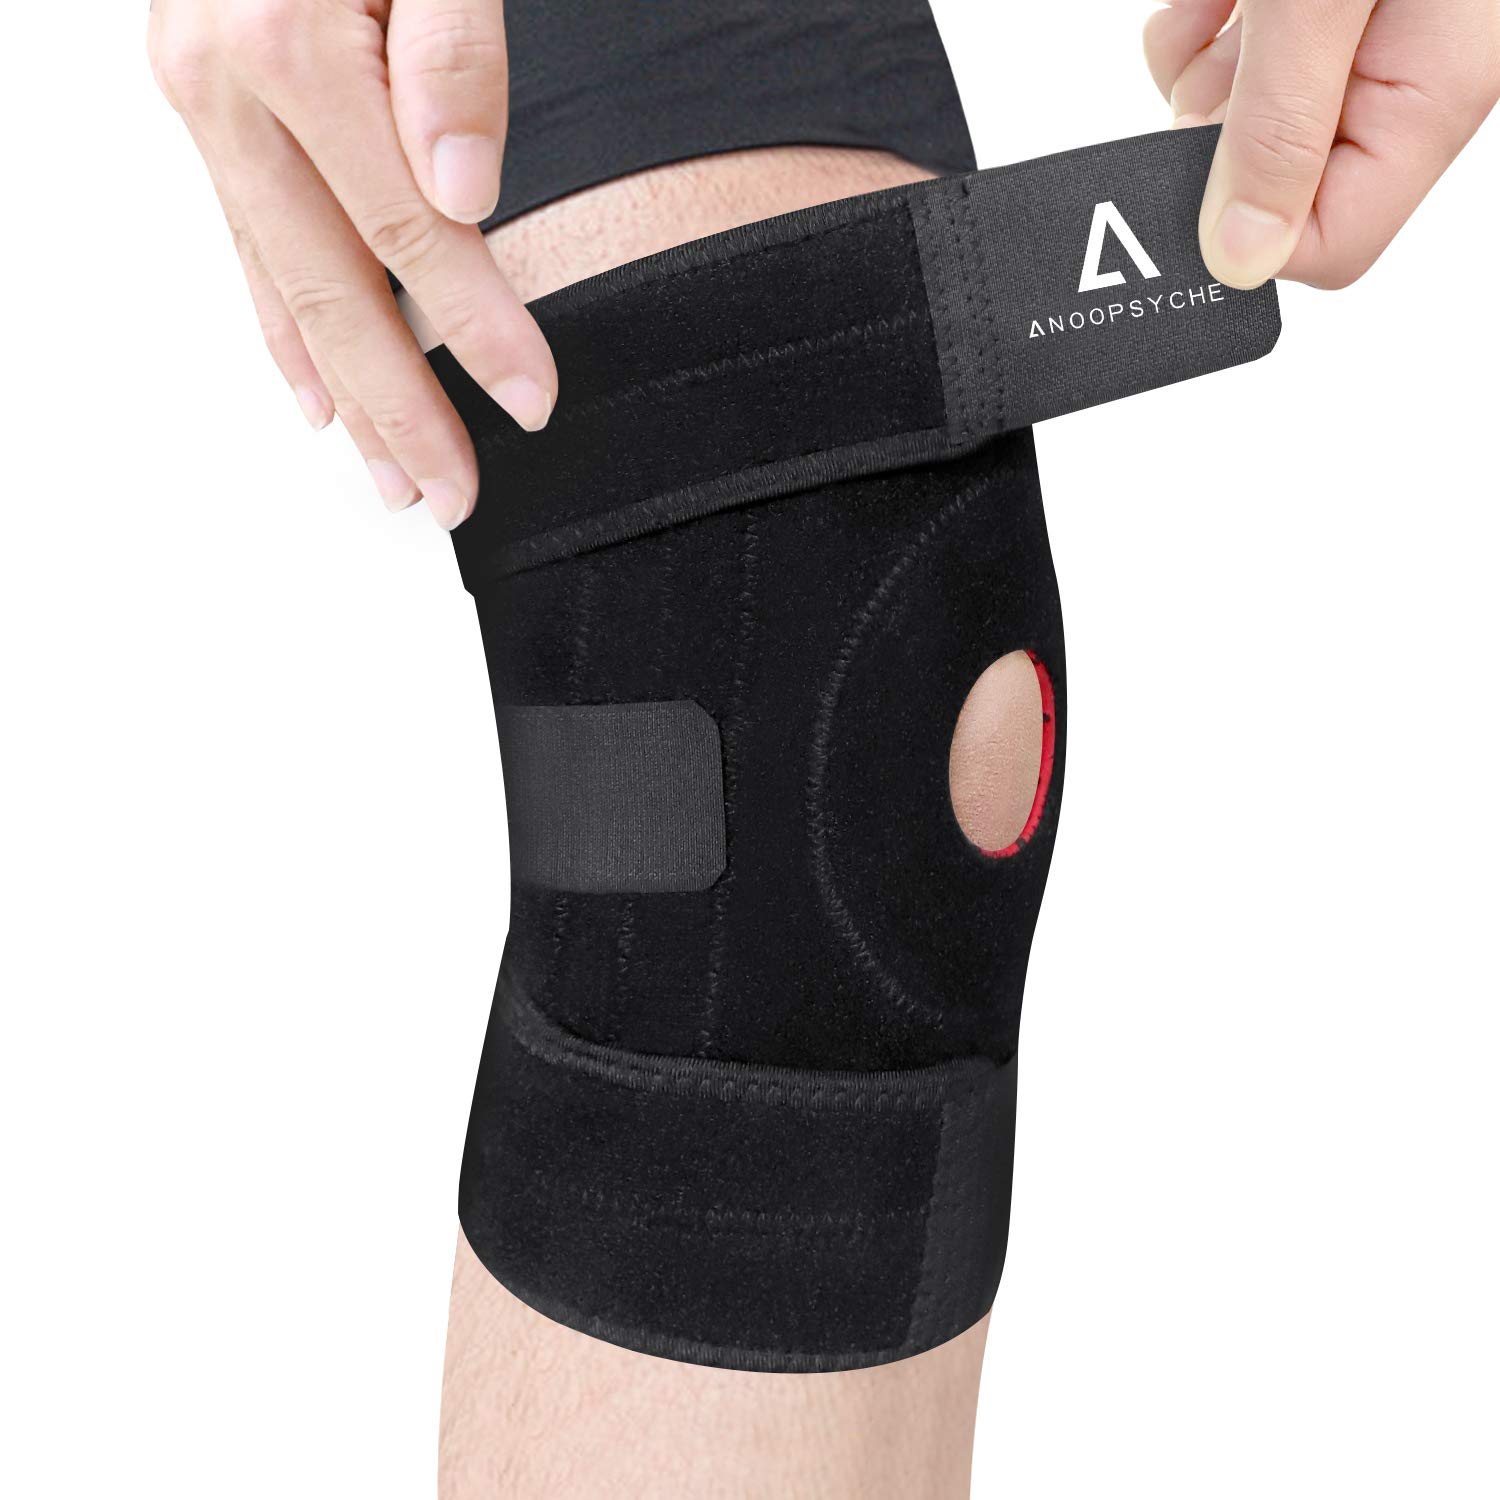 Anoopsyche Knee Support for Men Women Adjustable Open-Patella